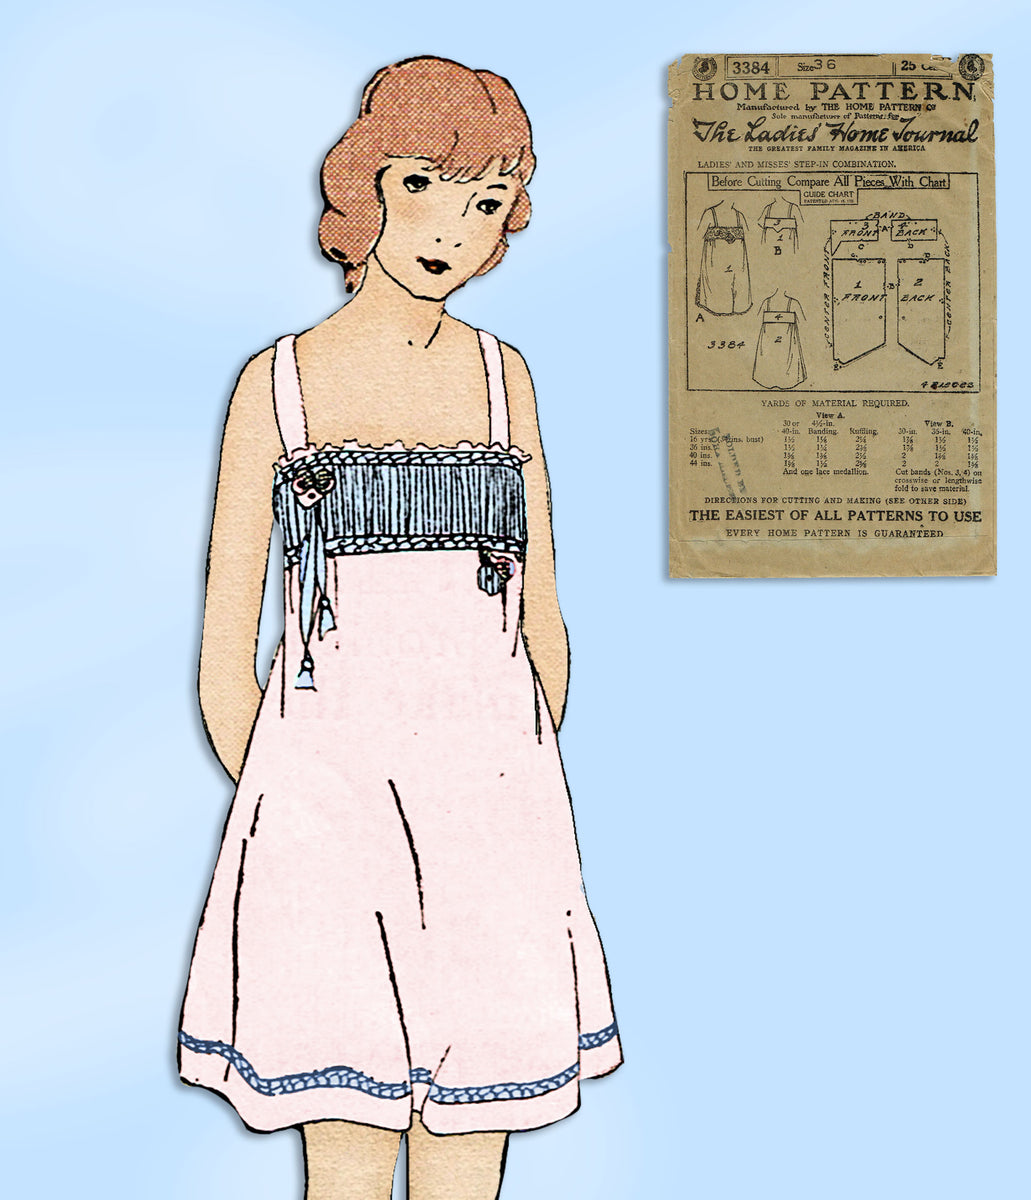 RH1037 — 1890s-1920s Ladies' Under Knickers sewing pattern